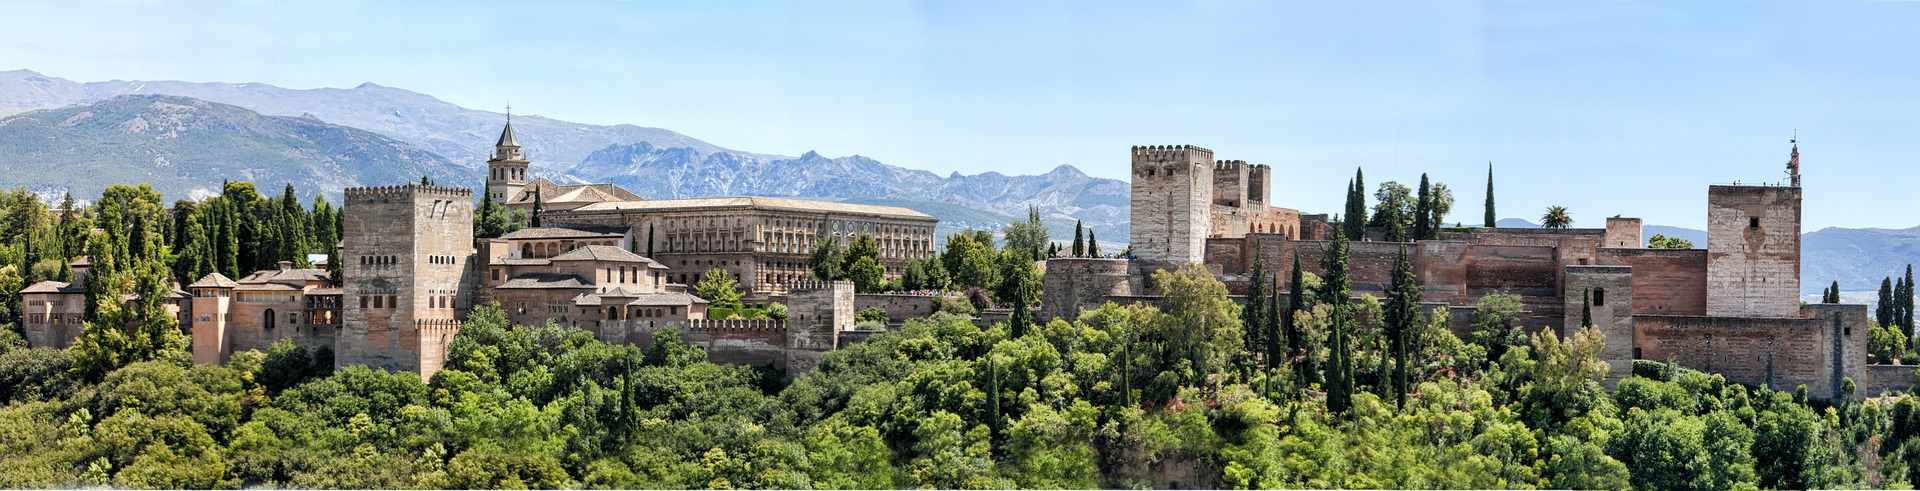 The Alhambra, Granada, Spain. Photo by ddouk on Pixabay.